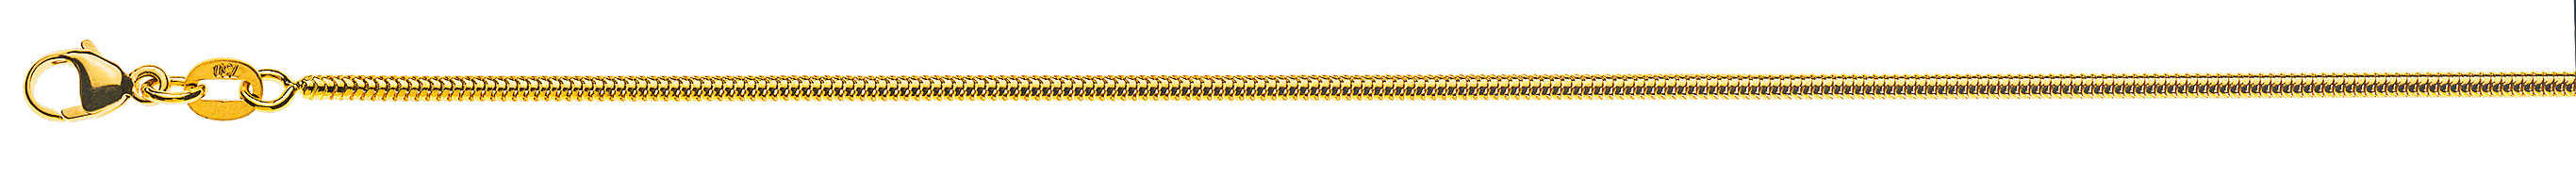 AURONOS Prestige Necklace yellow gold 18K snake chain 60cm 1.6mm